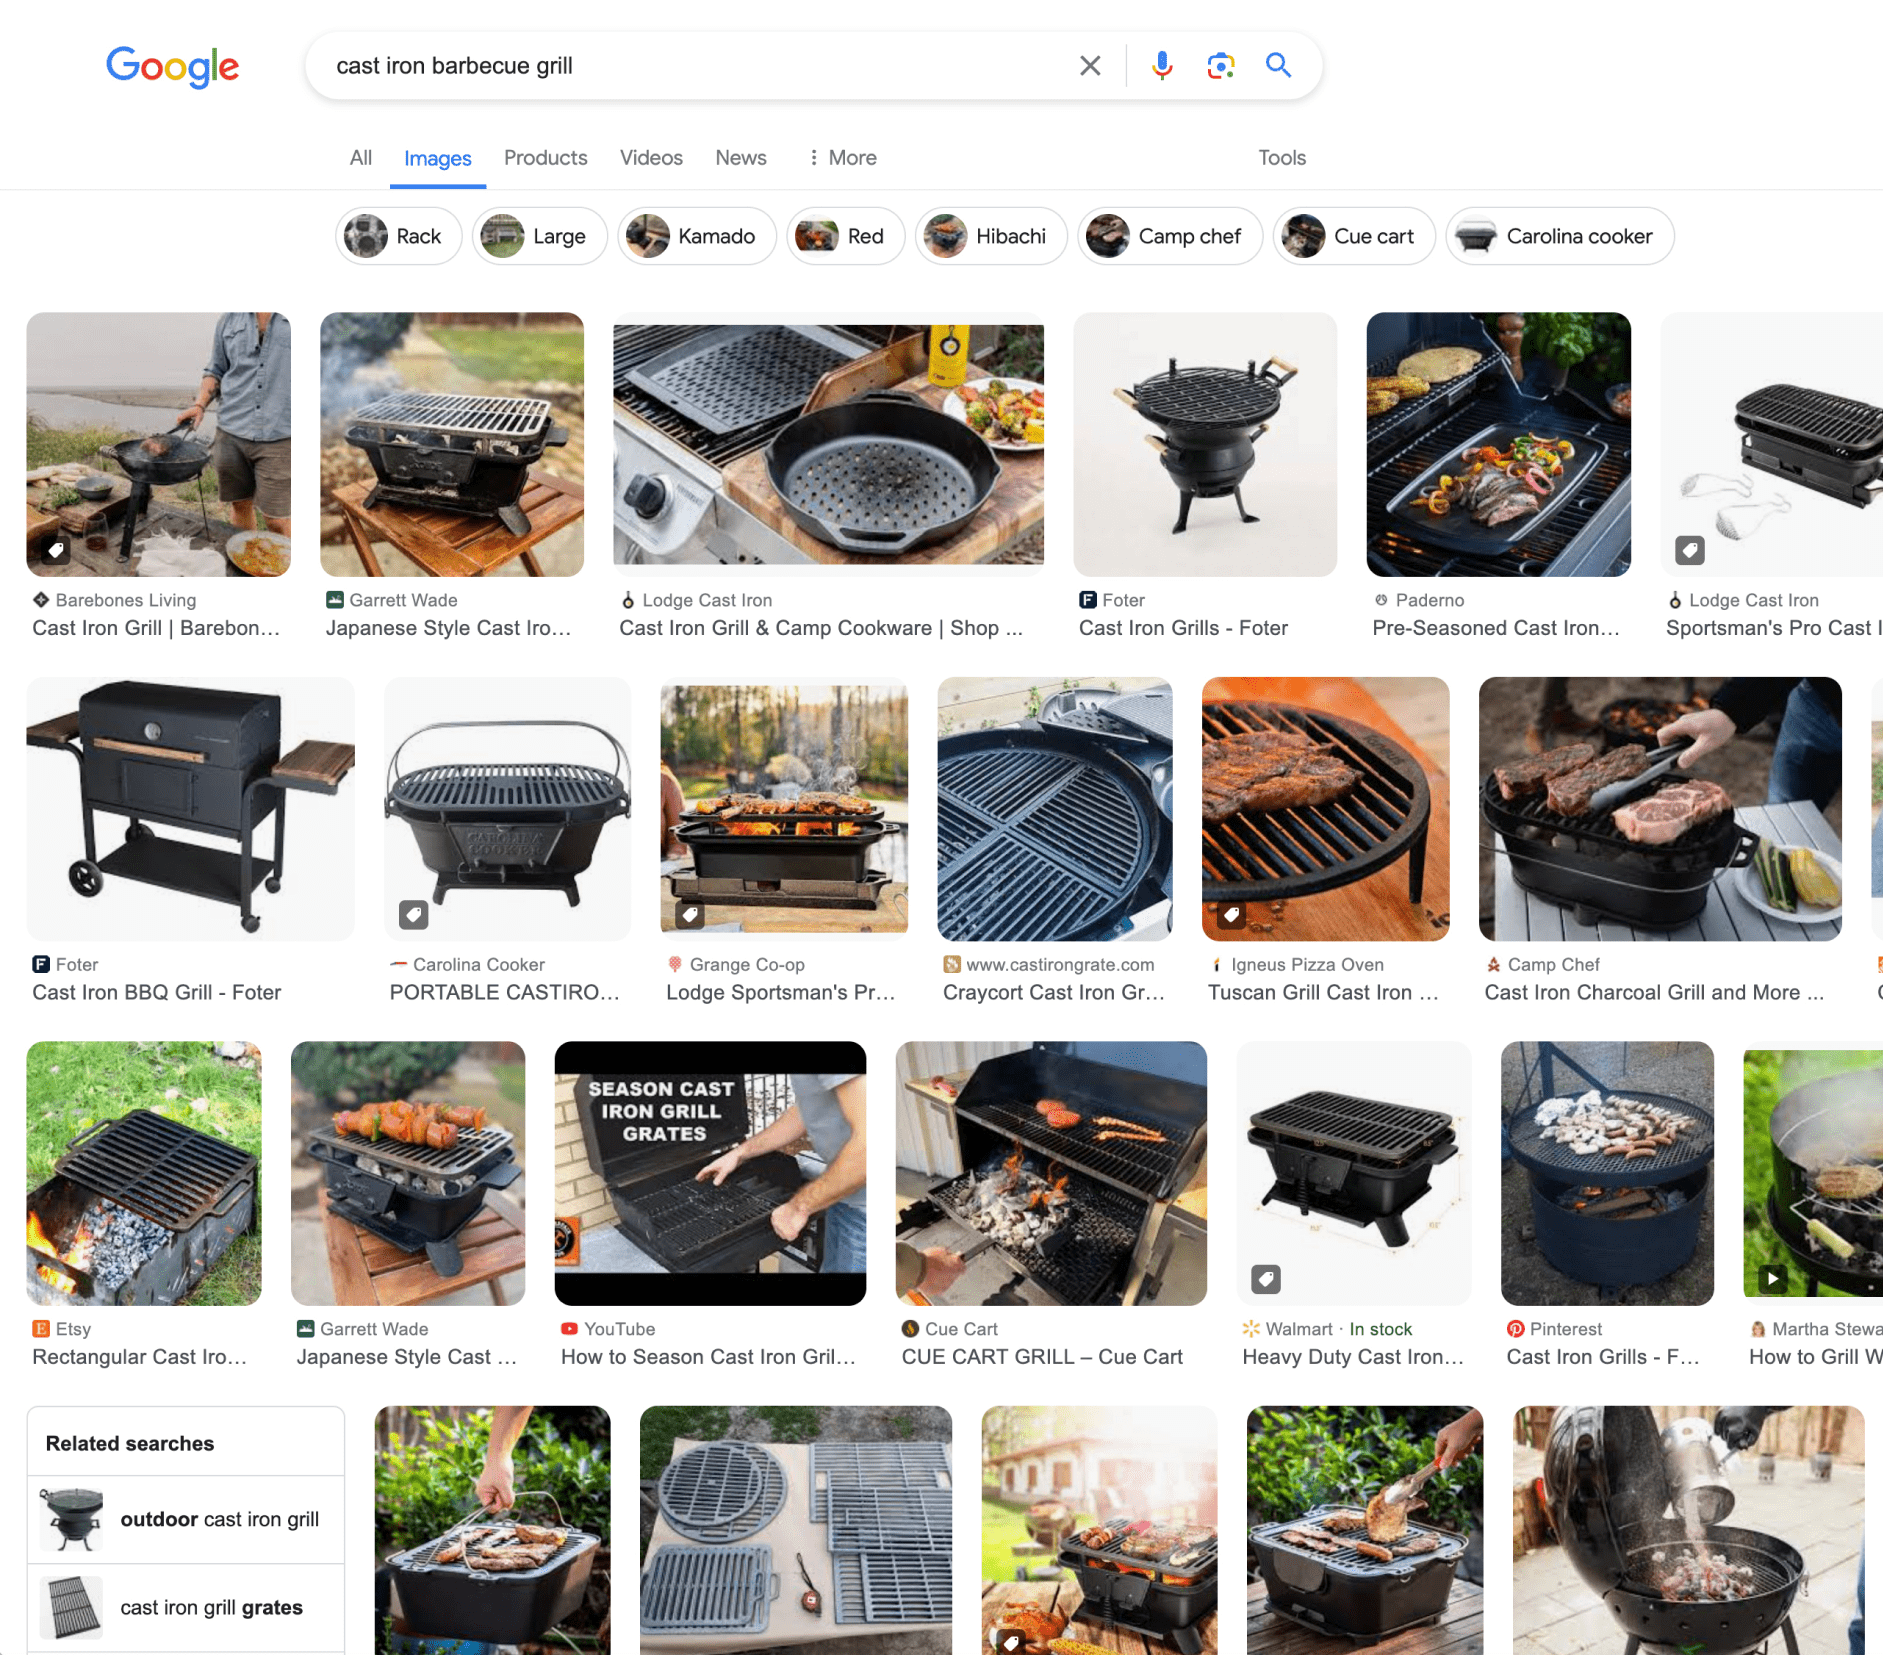 Google Images Scraper